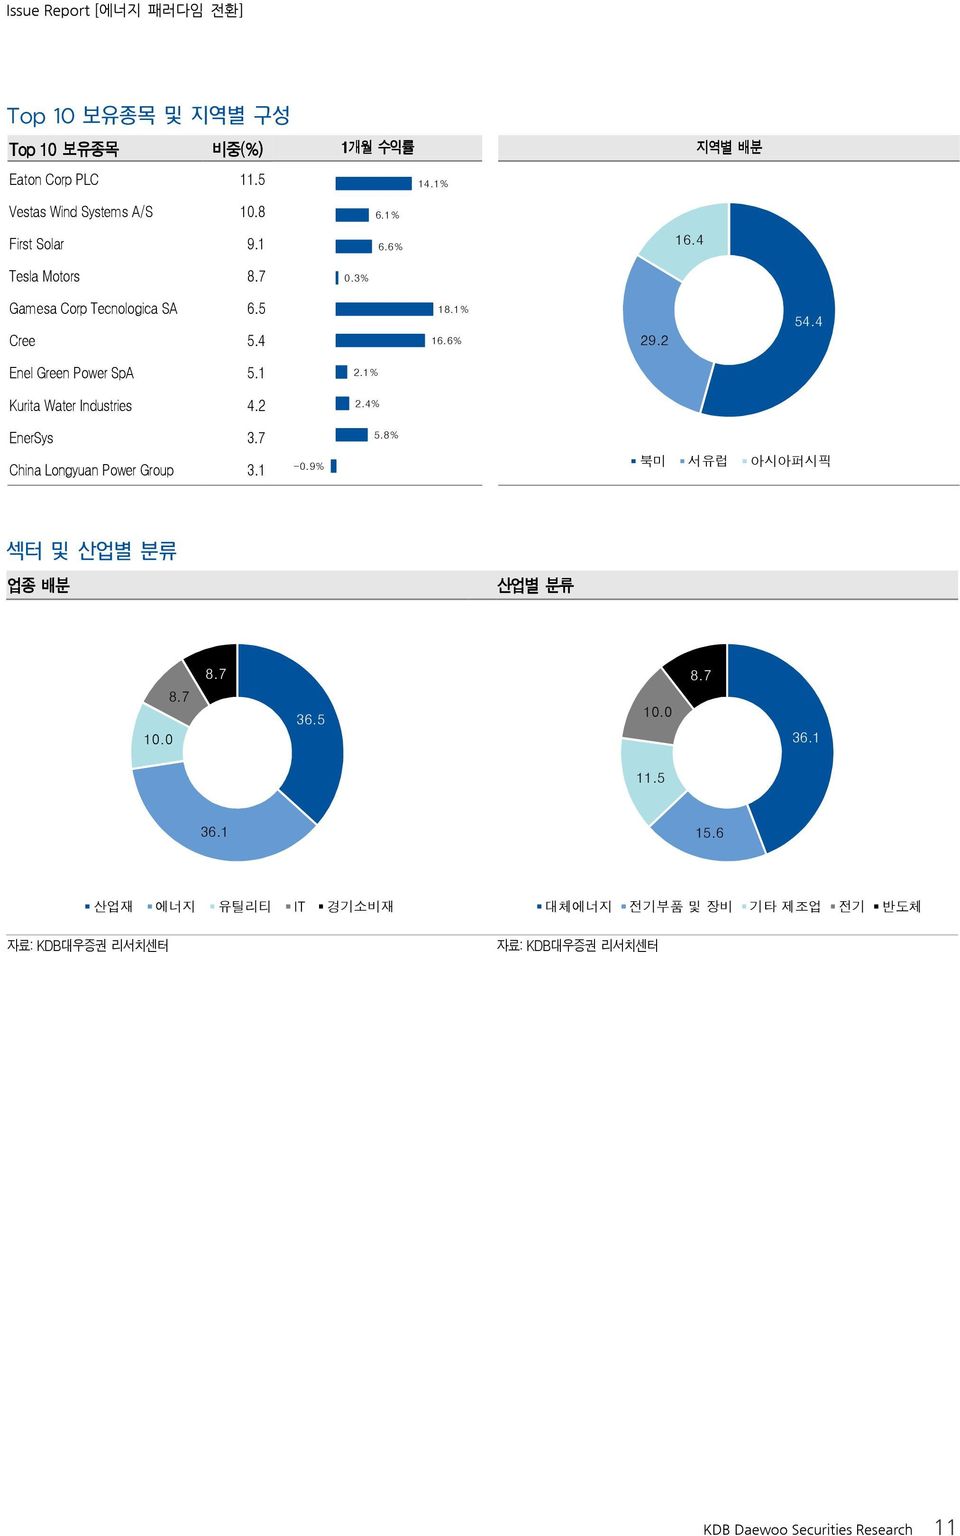 1% Kurita Water Industries 4.2 2.4% EnerSys 3.7 5.8% China Longyuan Power Group 3.1-0.